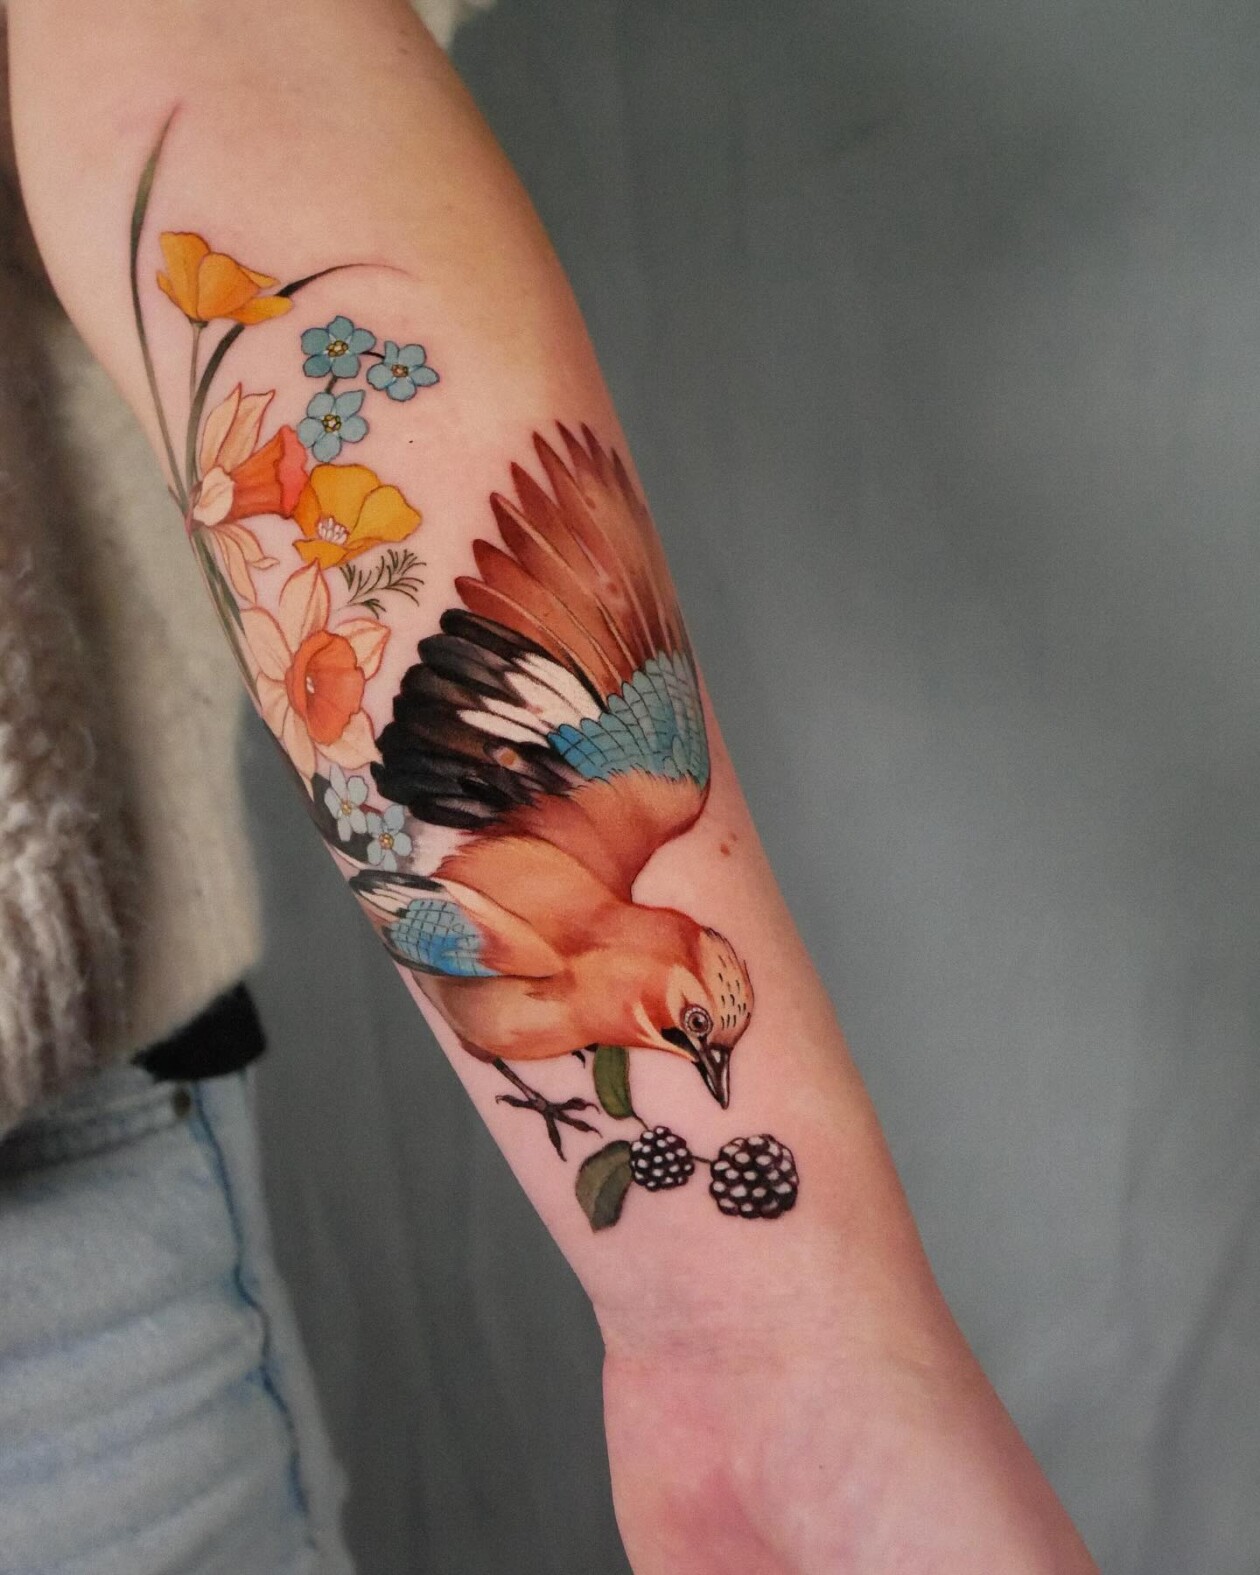 Botany And Animal Illustrative Tattoos By Vanessa Core (11)